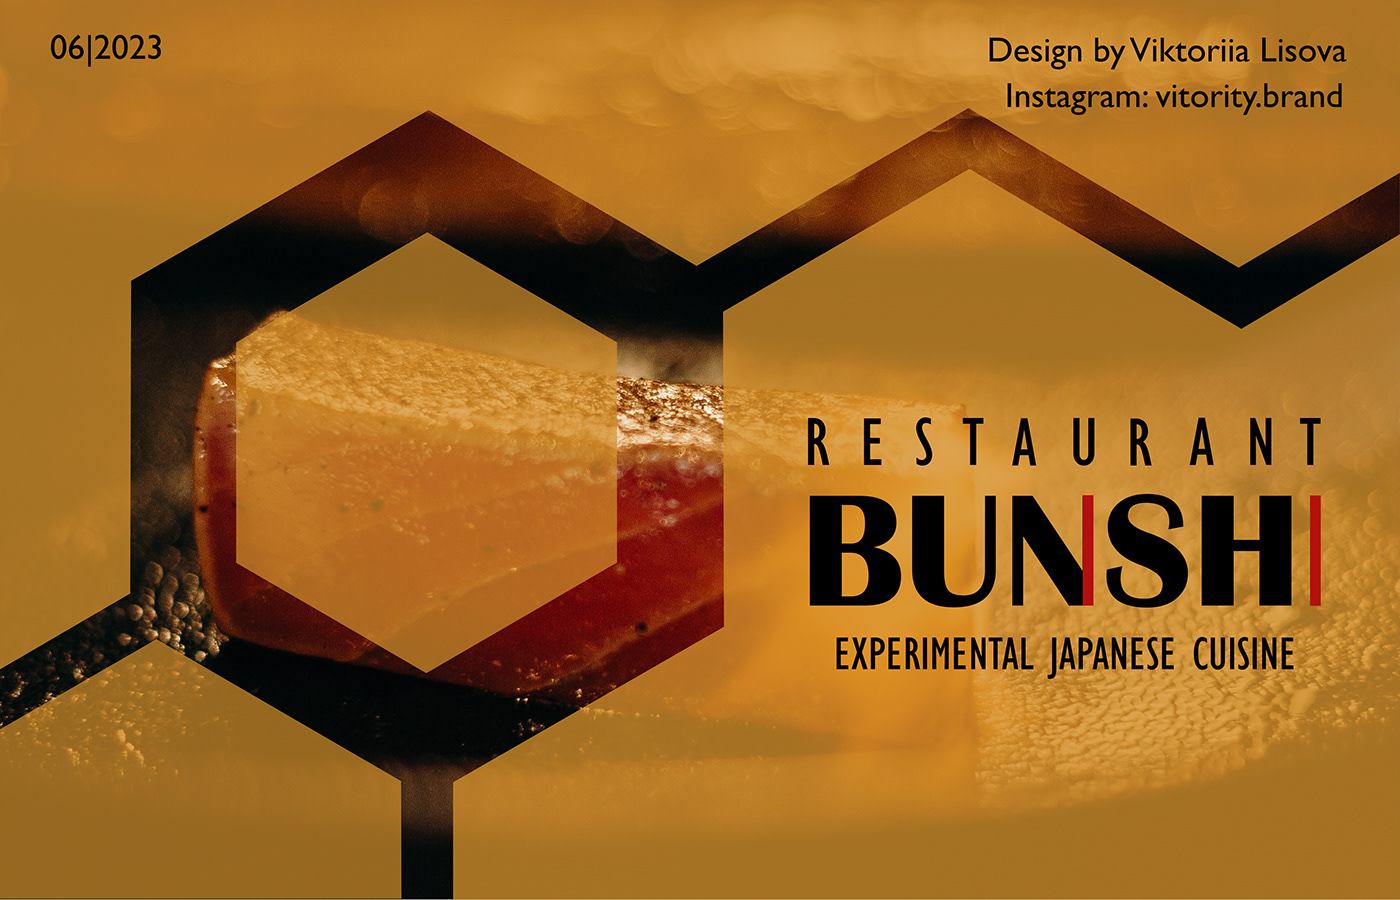 Logo for an experimental Japanese cuisine restaurant